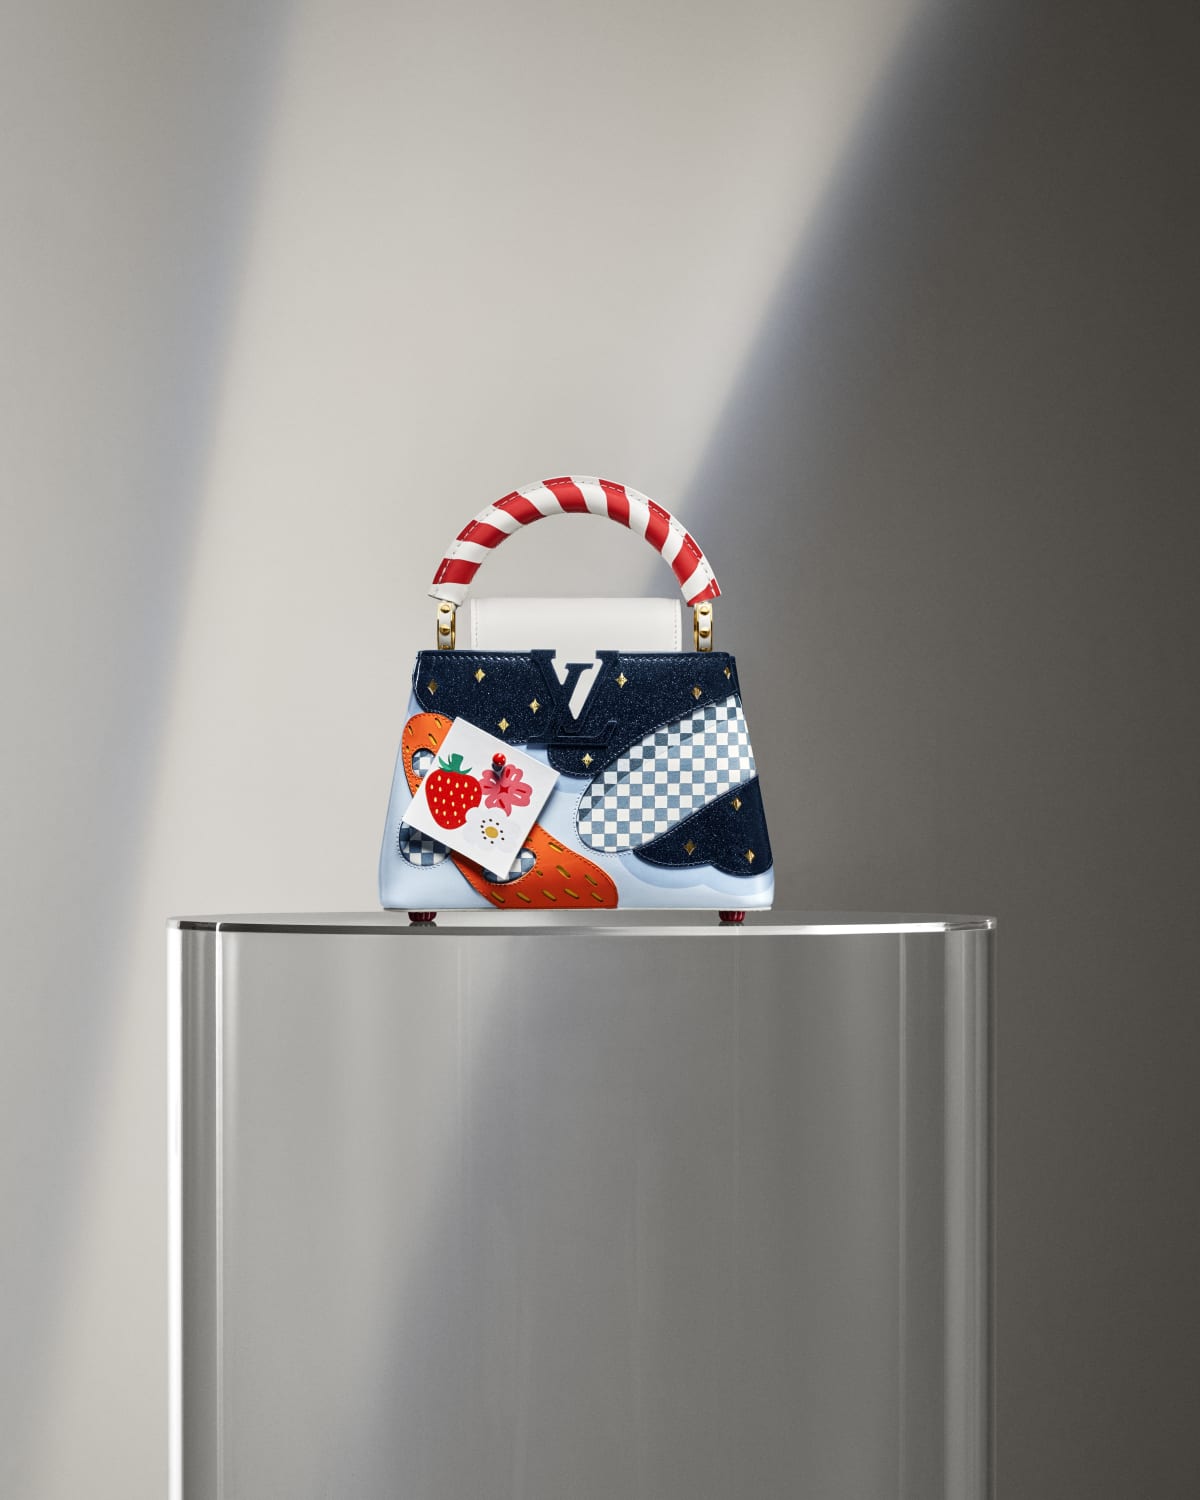 6 Major Artists Reimagine Louis Vuitton's Classic Capucines Bag - Galerie